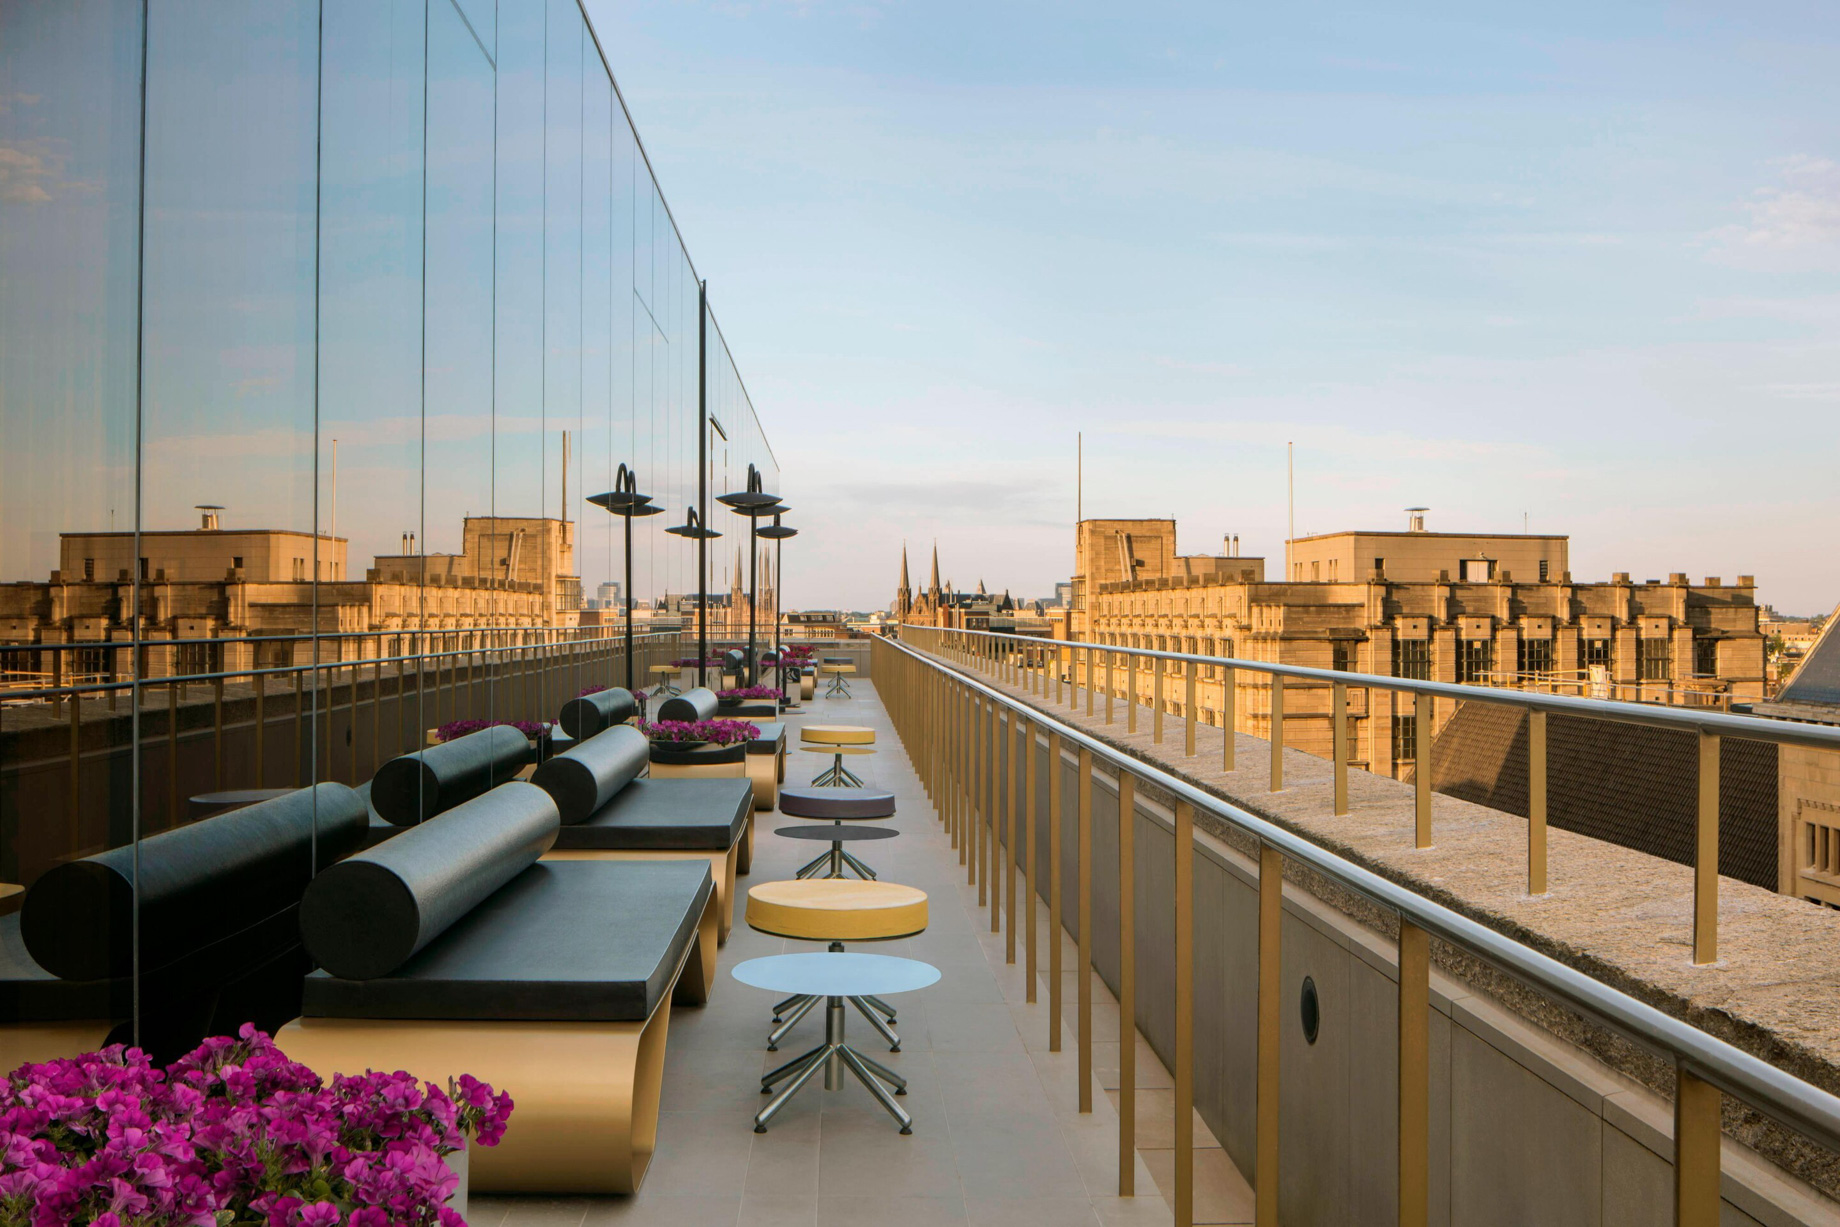 W Amsterdam Hotel – Amsterdam, Netherlands – Hotel Lounge Terrace